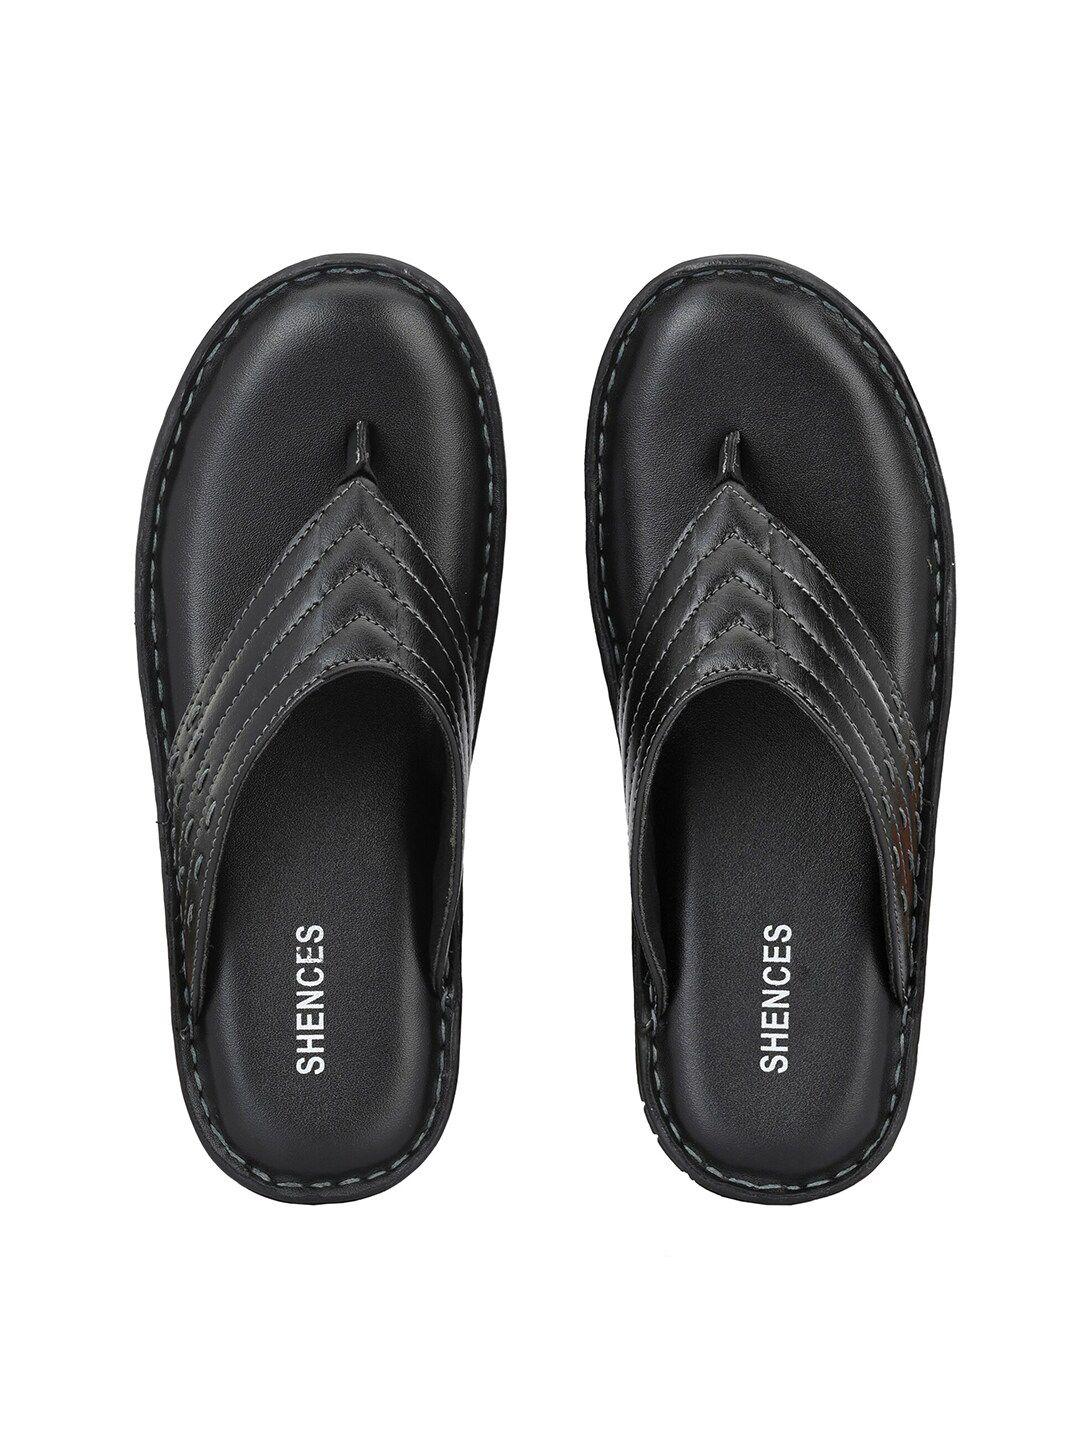 shences-men-comfort-sandals